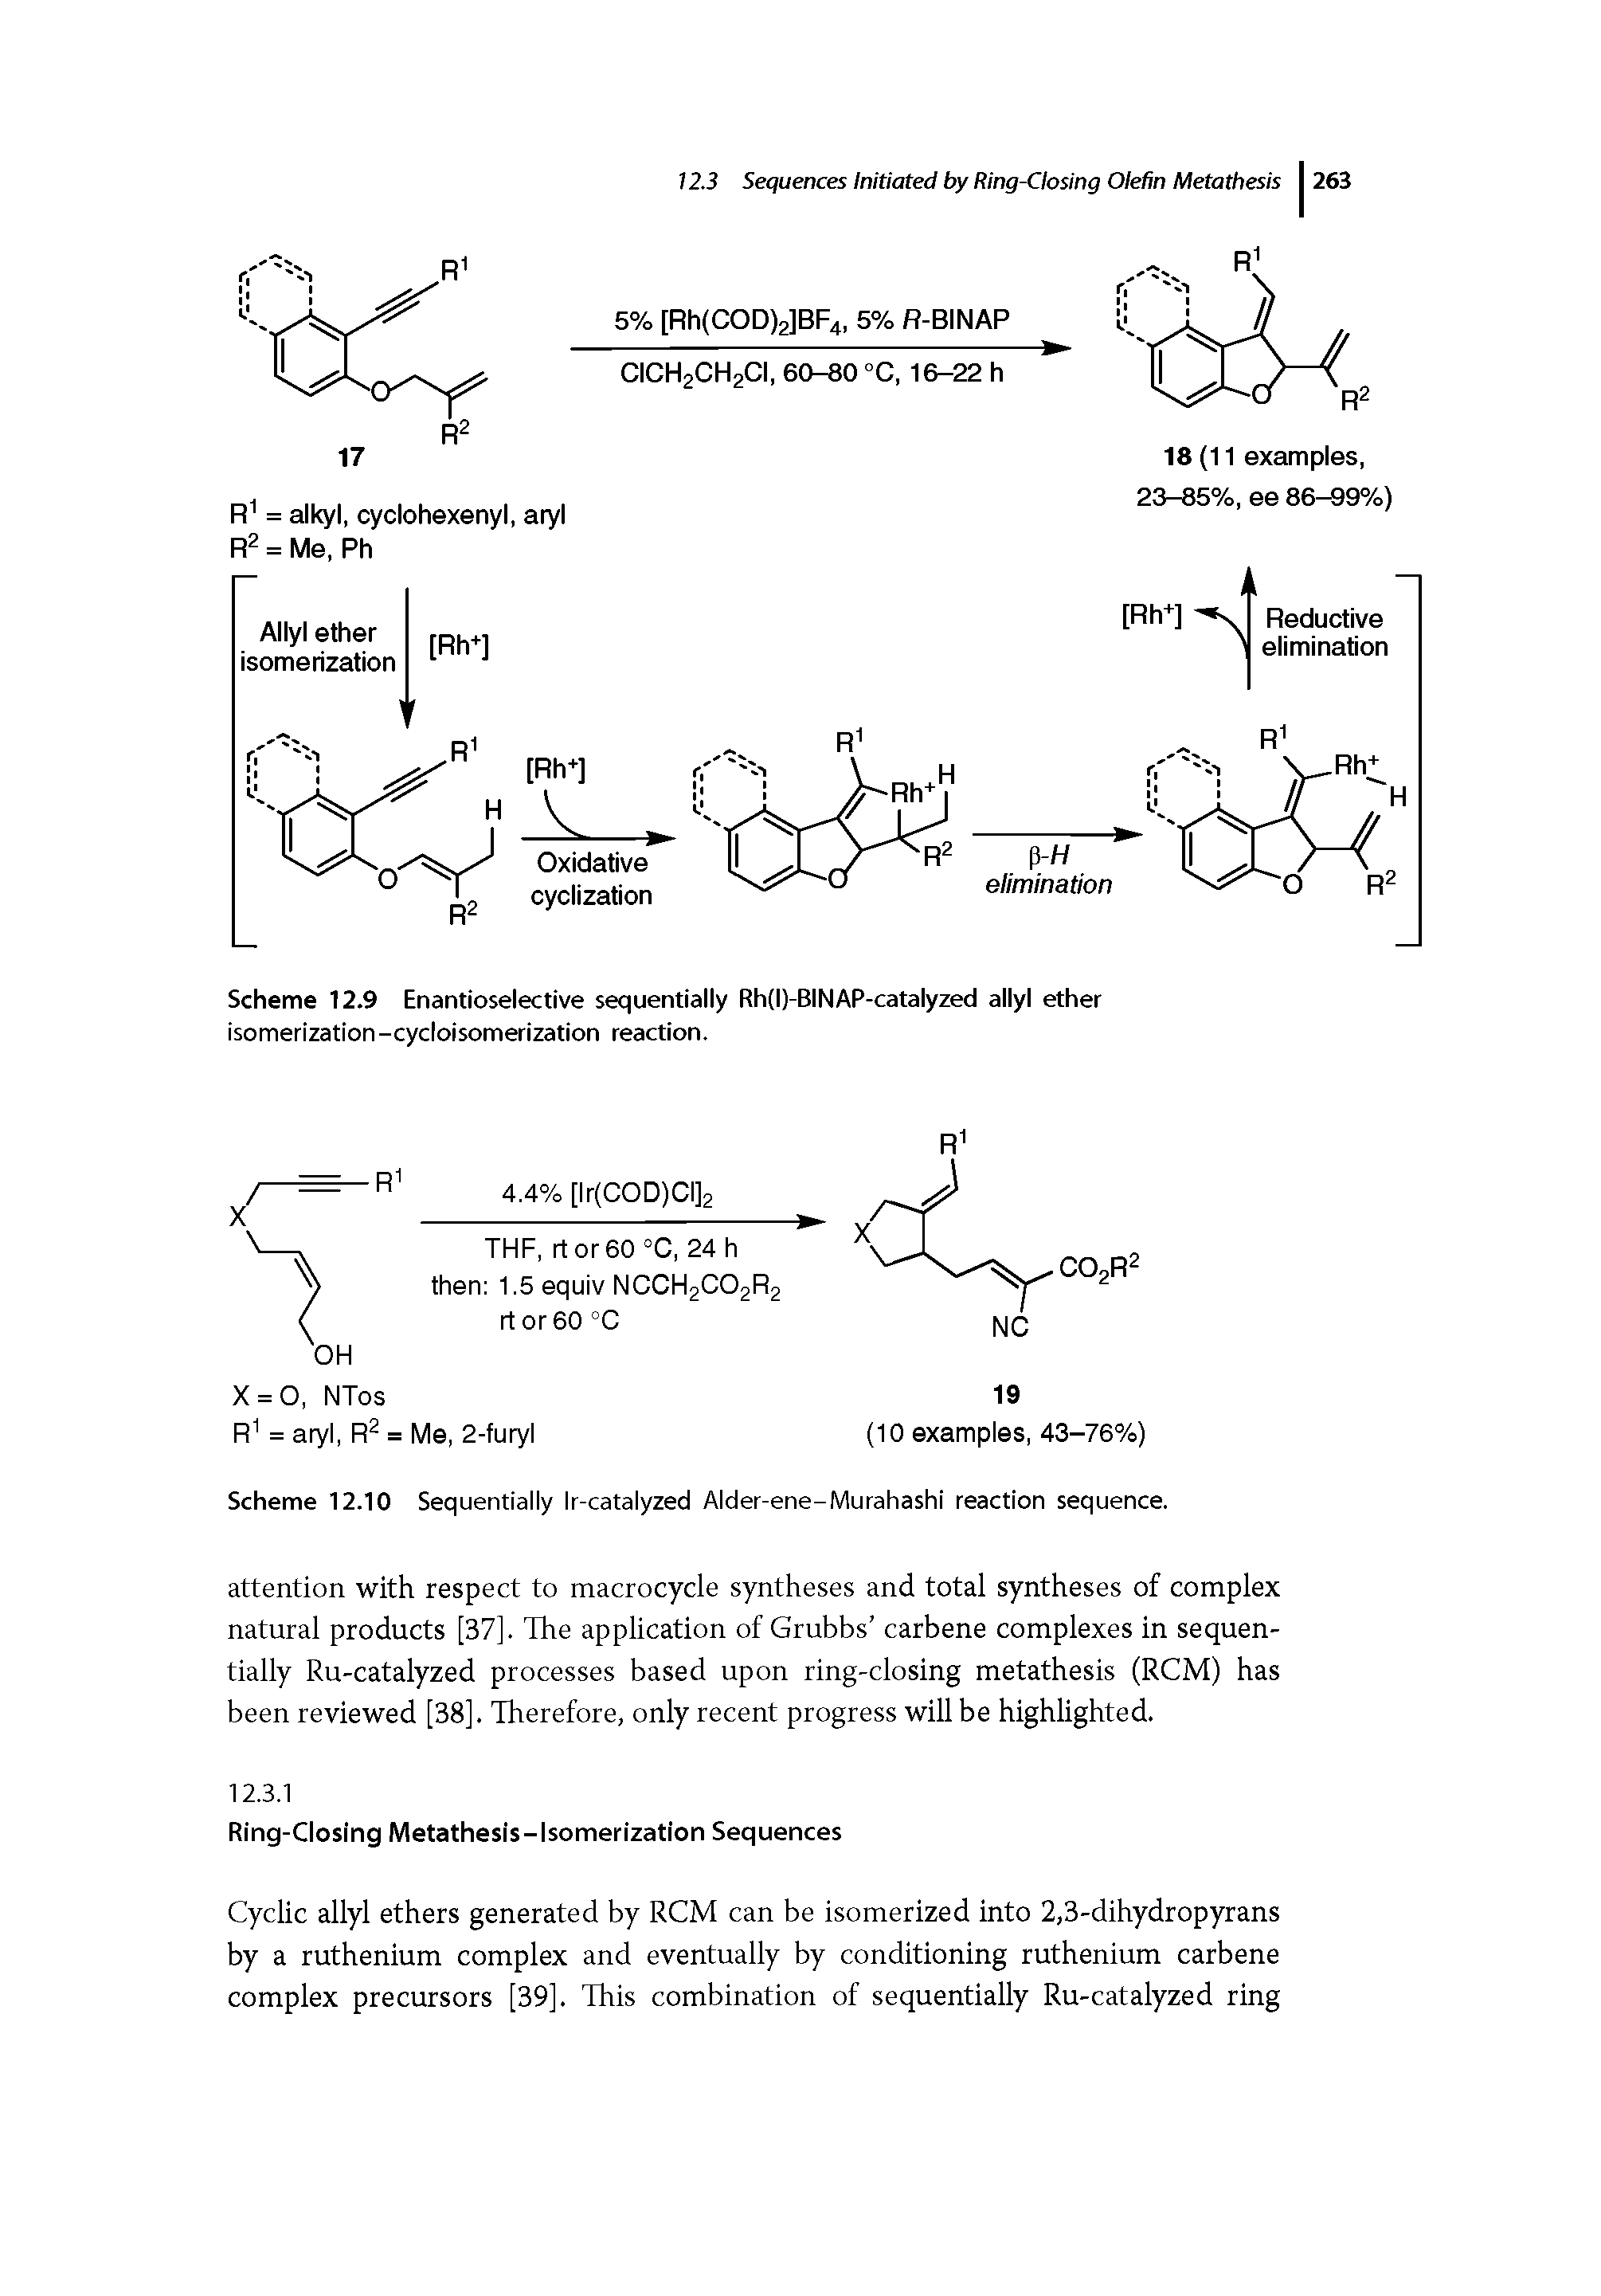 Scheme 12.9 Enantioselective sequentially Rh(l)-BINAP-catalyzed allyl ether isomerization-cycloisomerization reaction.